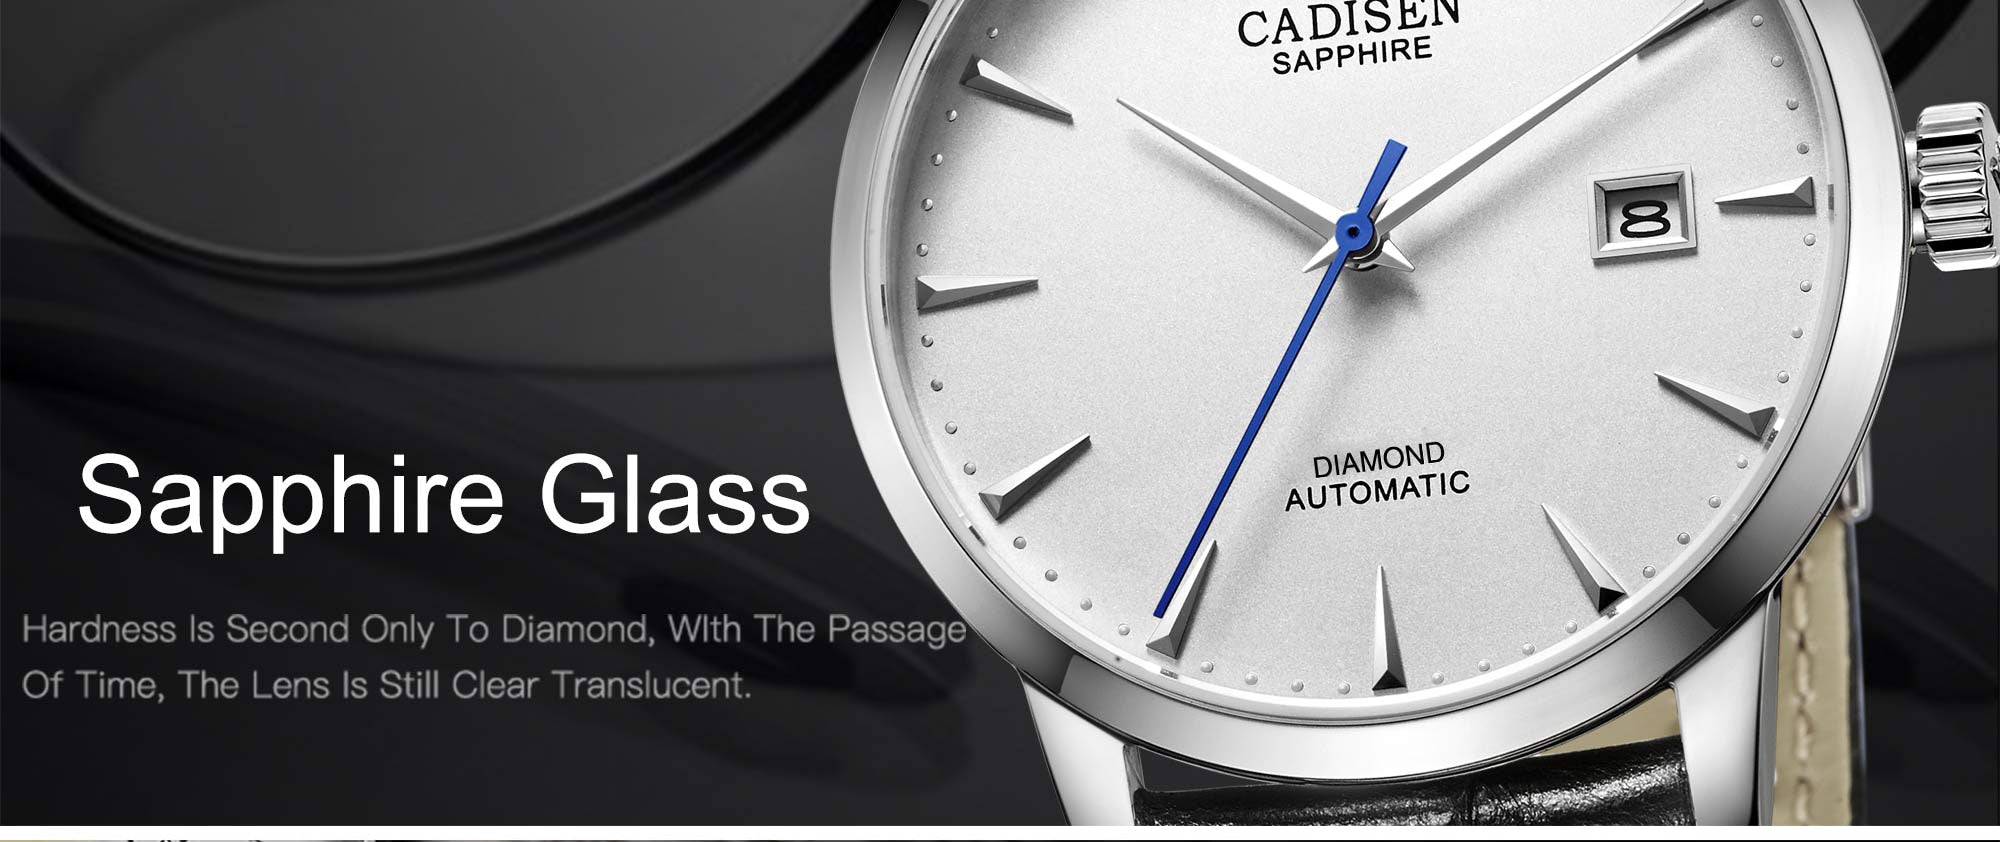 CADISEN Men Watches Automatic Mechanical Wrist Watch MIYOTA 9015 Top Brand Luxury Real Diamond Watch Curved Sapphire Glass Clock